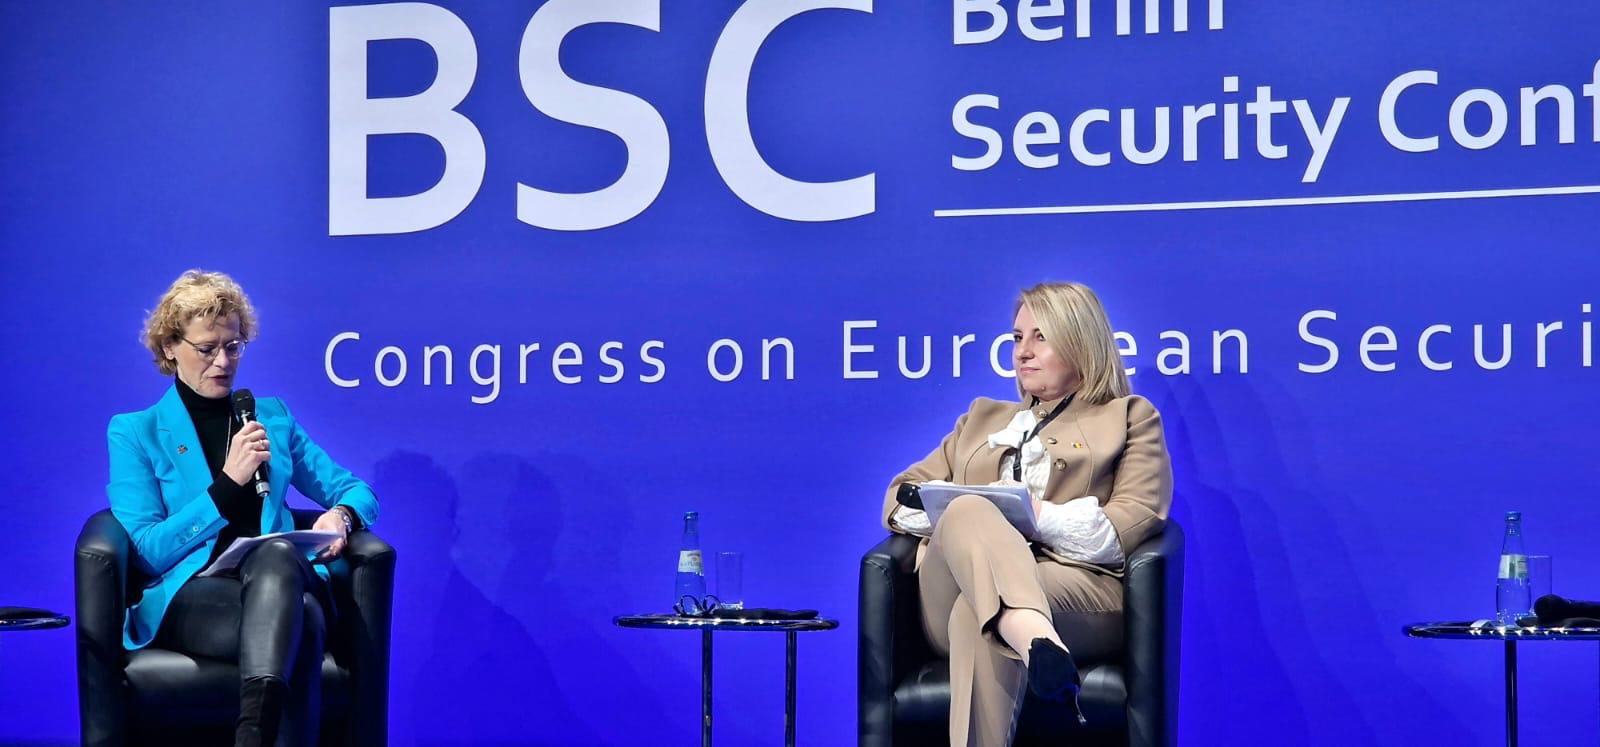 Conferința de Securitate de la Berlin